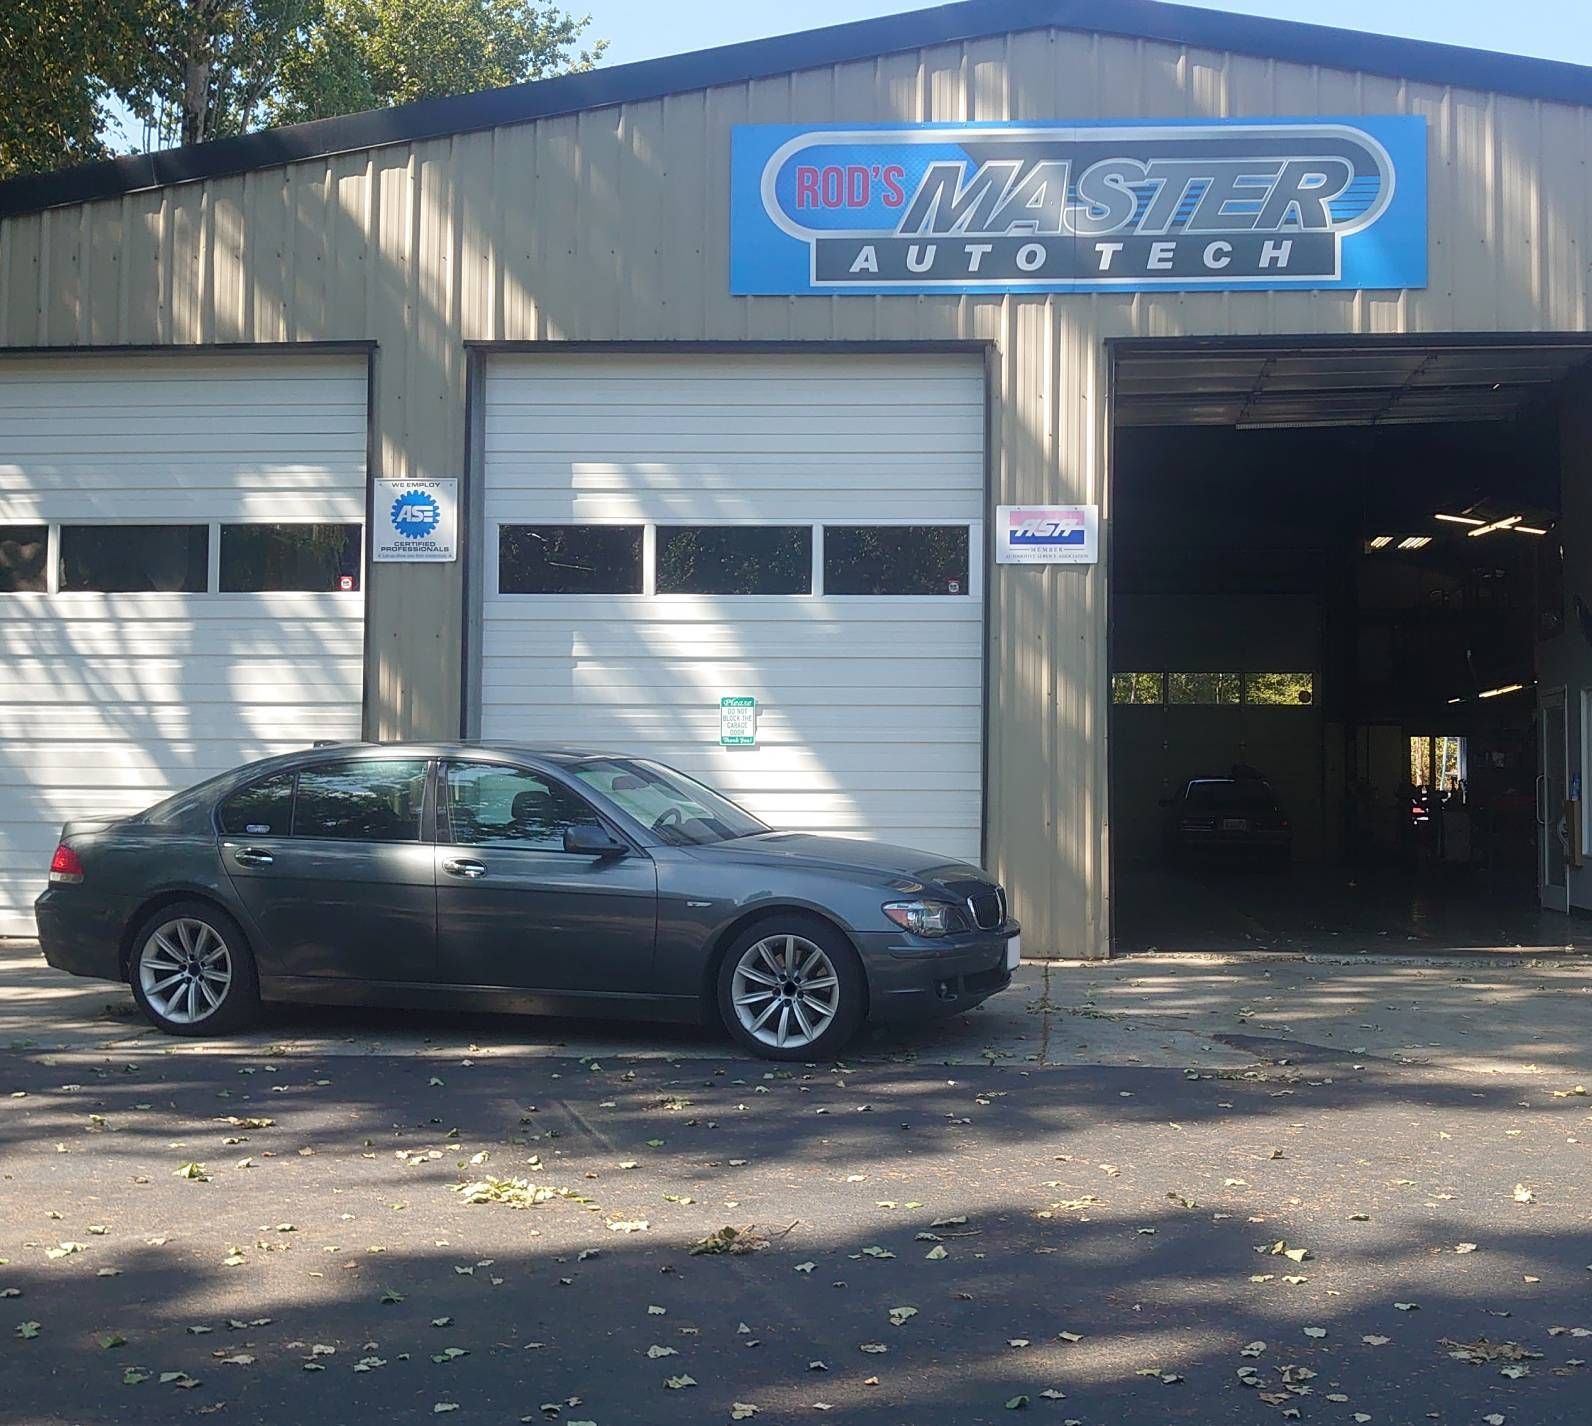 Our Auto Repair Shop in Bellingham, WA - Rod's Master Auto Tech